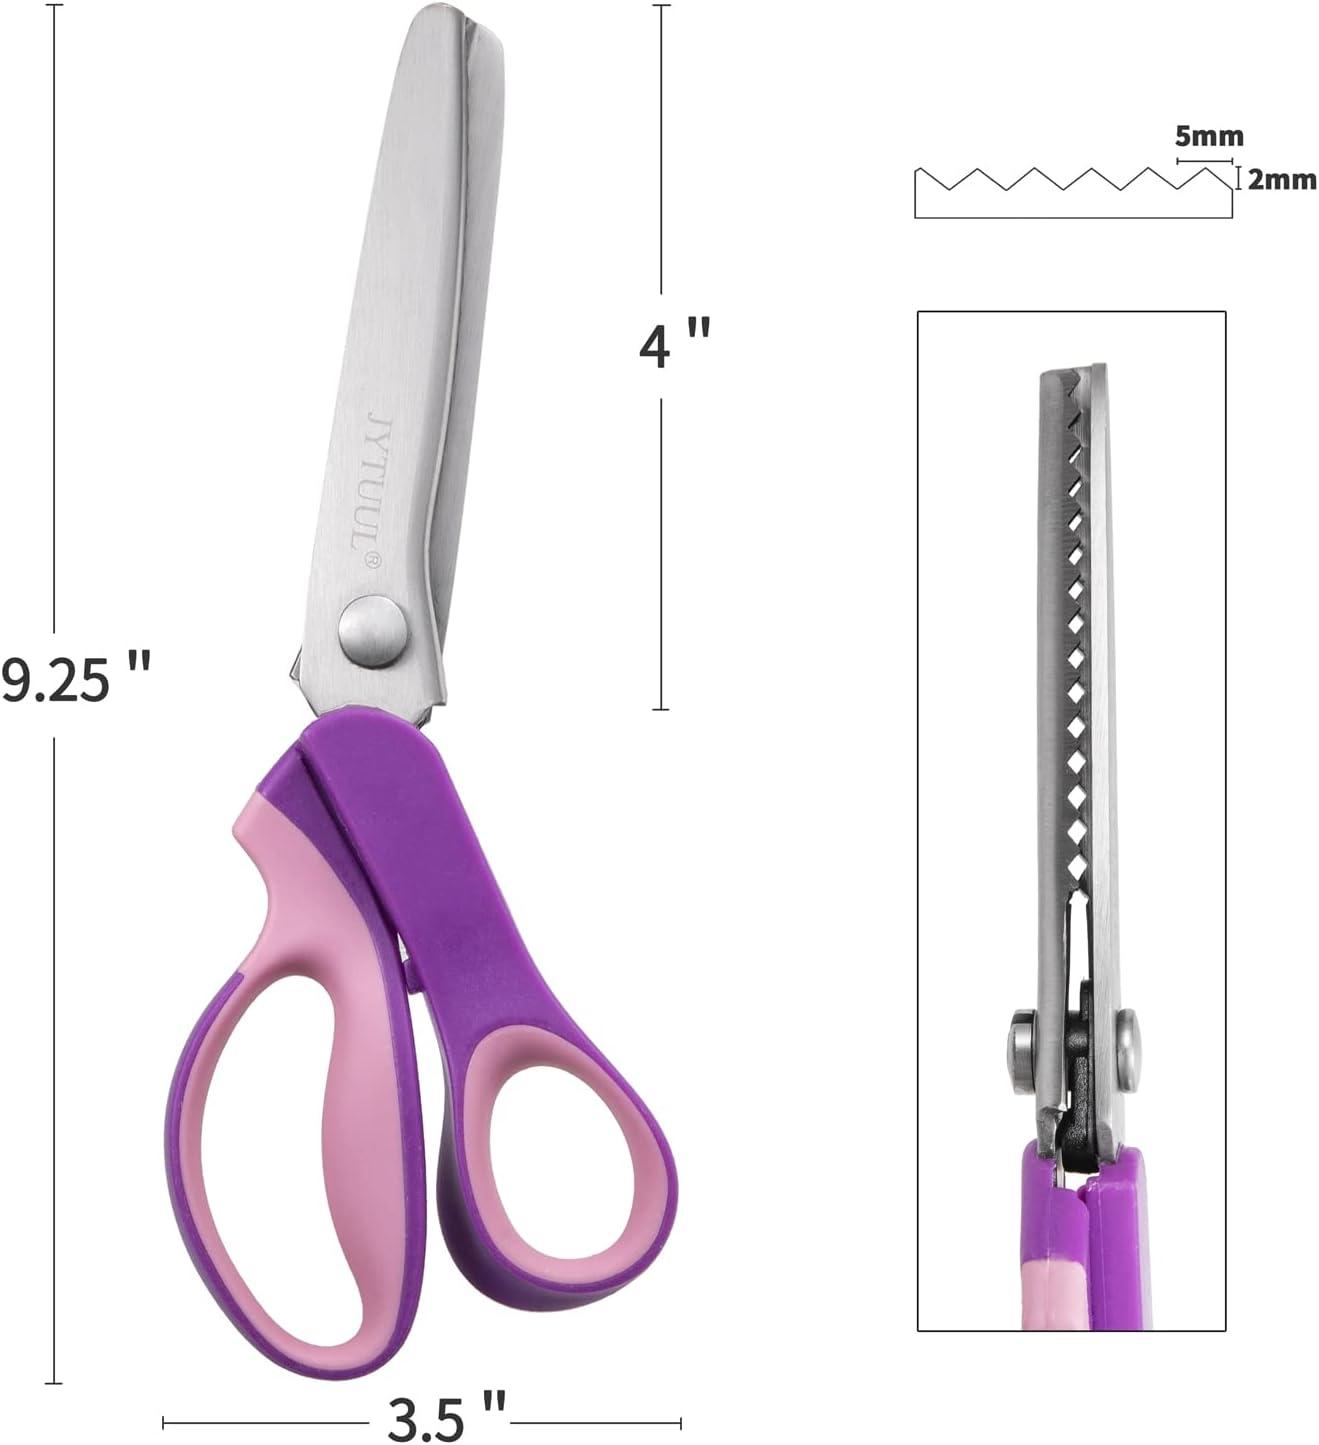 JYTUUL 3PCS Purple Craft Scissors, Sharp Tailor